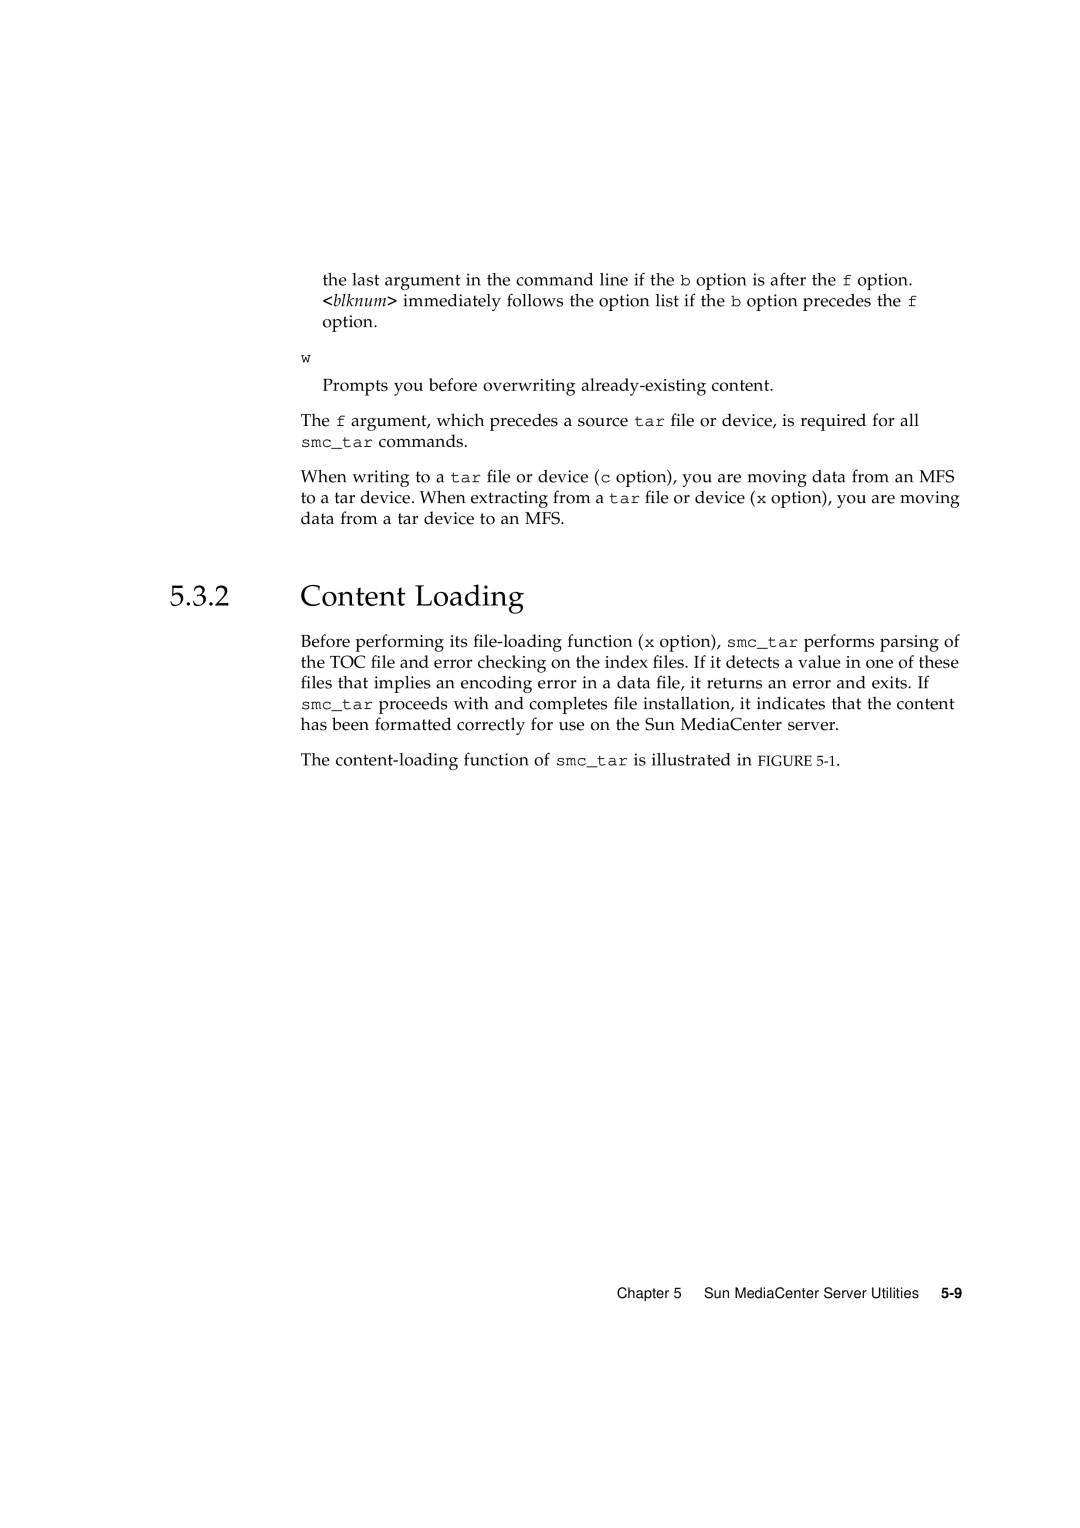 Sun Microsystems 2.1 manual Content Loading 